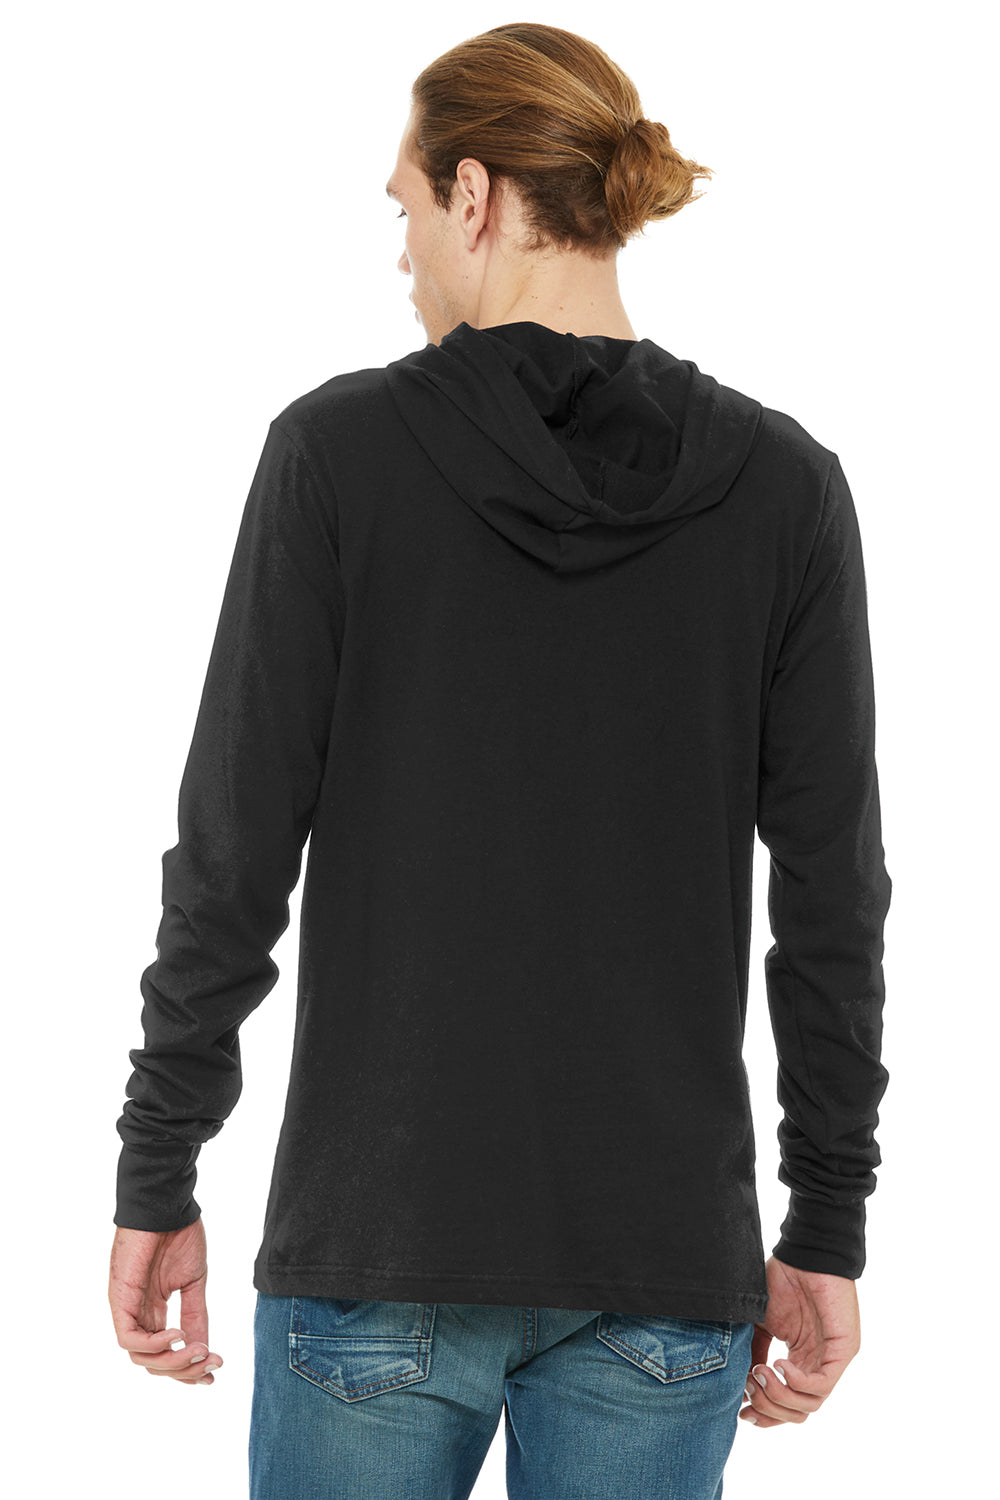 Bella + Canvas BC3512/3512 Mens Jersey Long Sleeve Hooded T-Shirt Hoodie Black Model Back